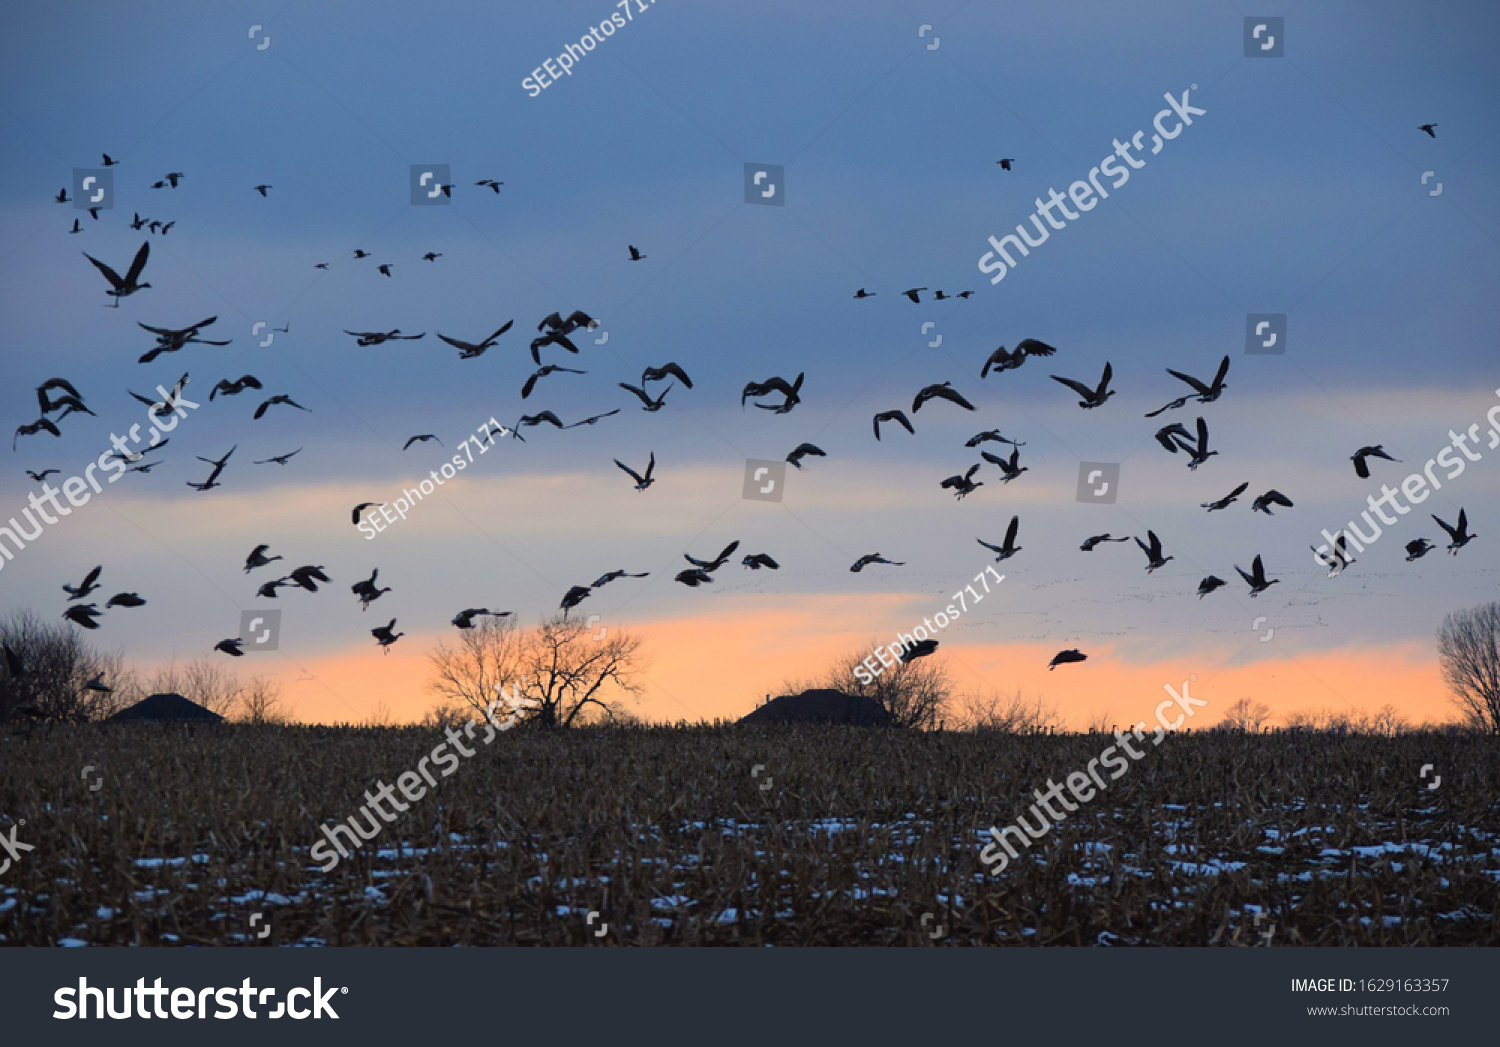 Big Flock Geese Flying Over Corn Stock Photo 1629163357 | Shutterstock